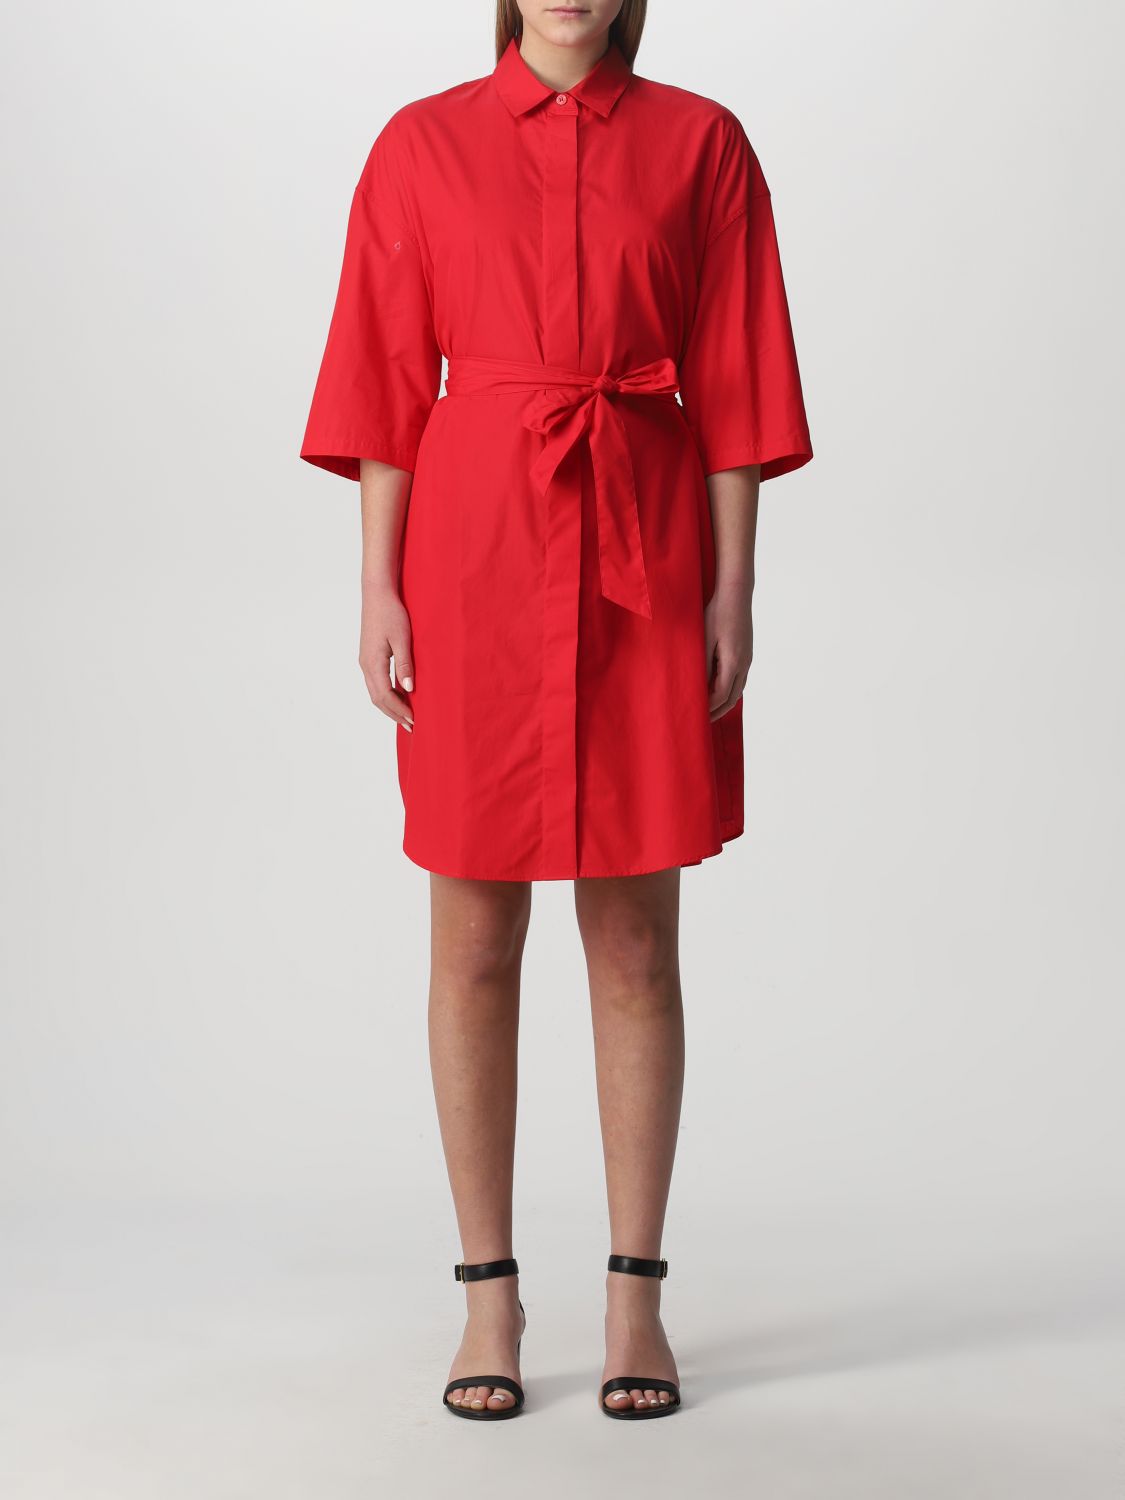 ARMANI EXCHANGE: dress for woman - Red | Armani Exchange dress ...